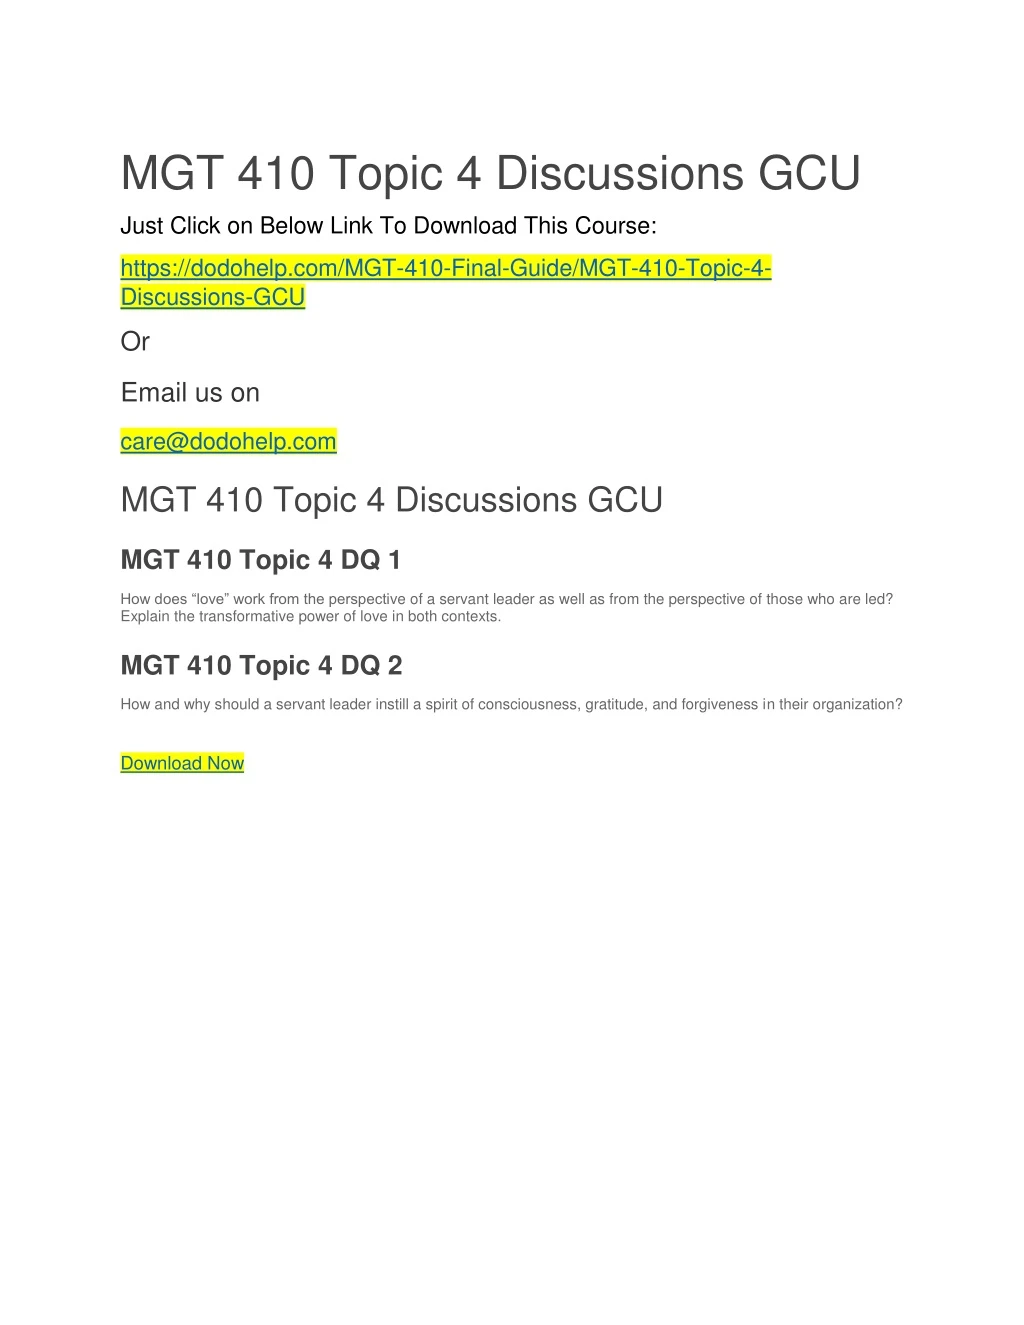 mgt 410 topic 4 discussions gcu just click